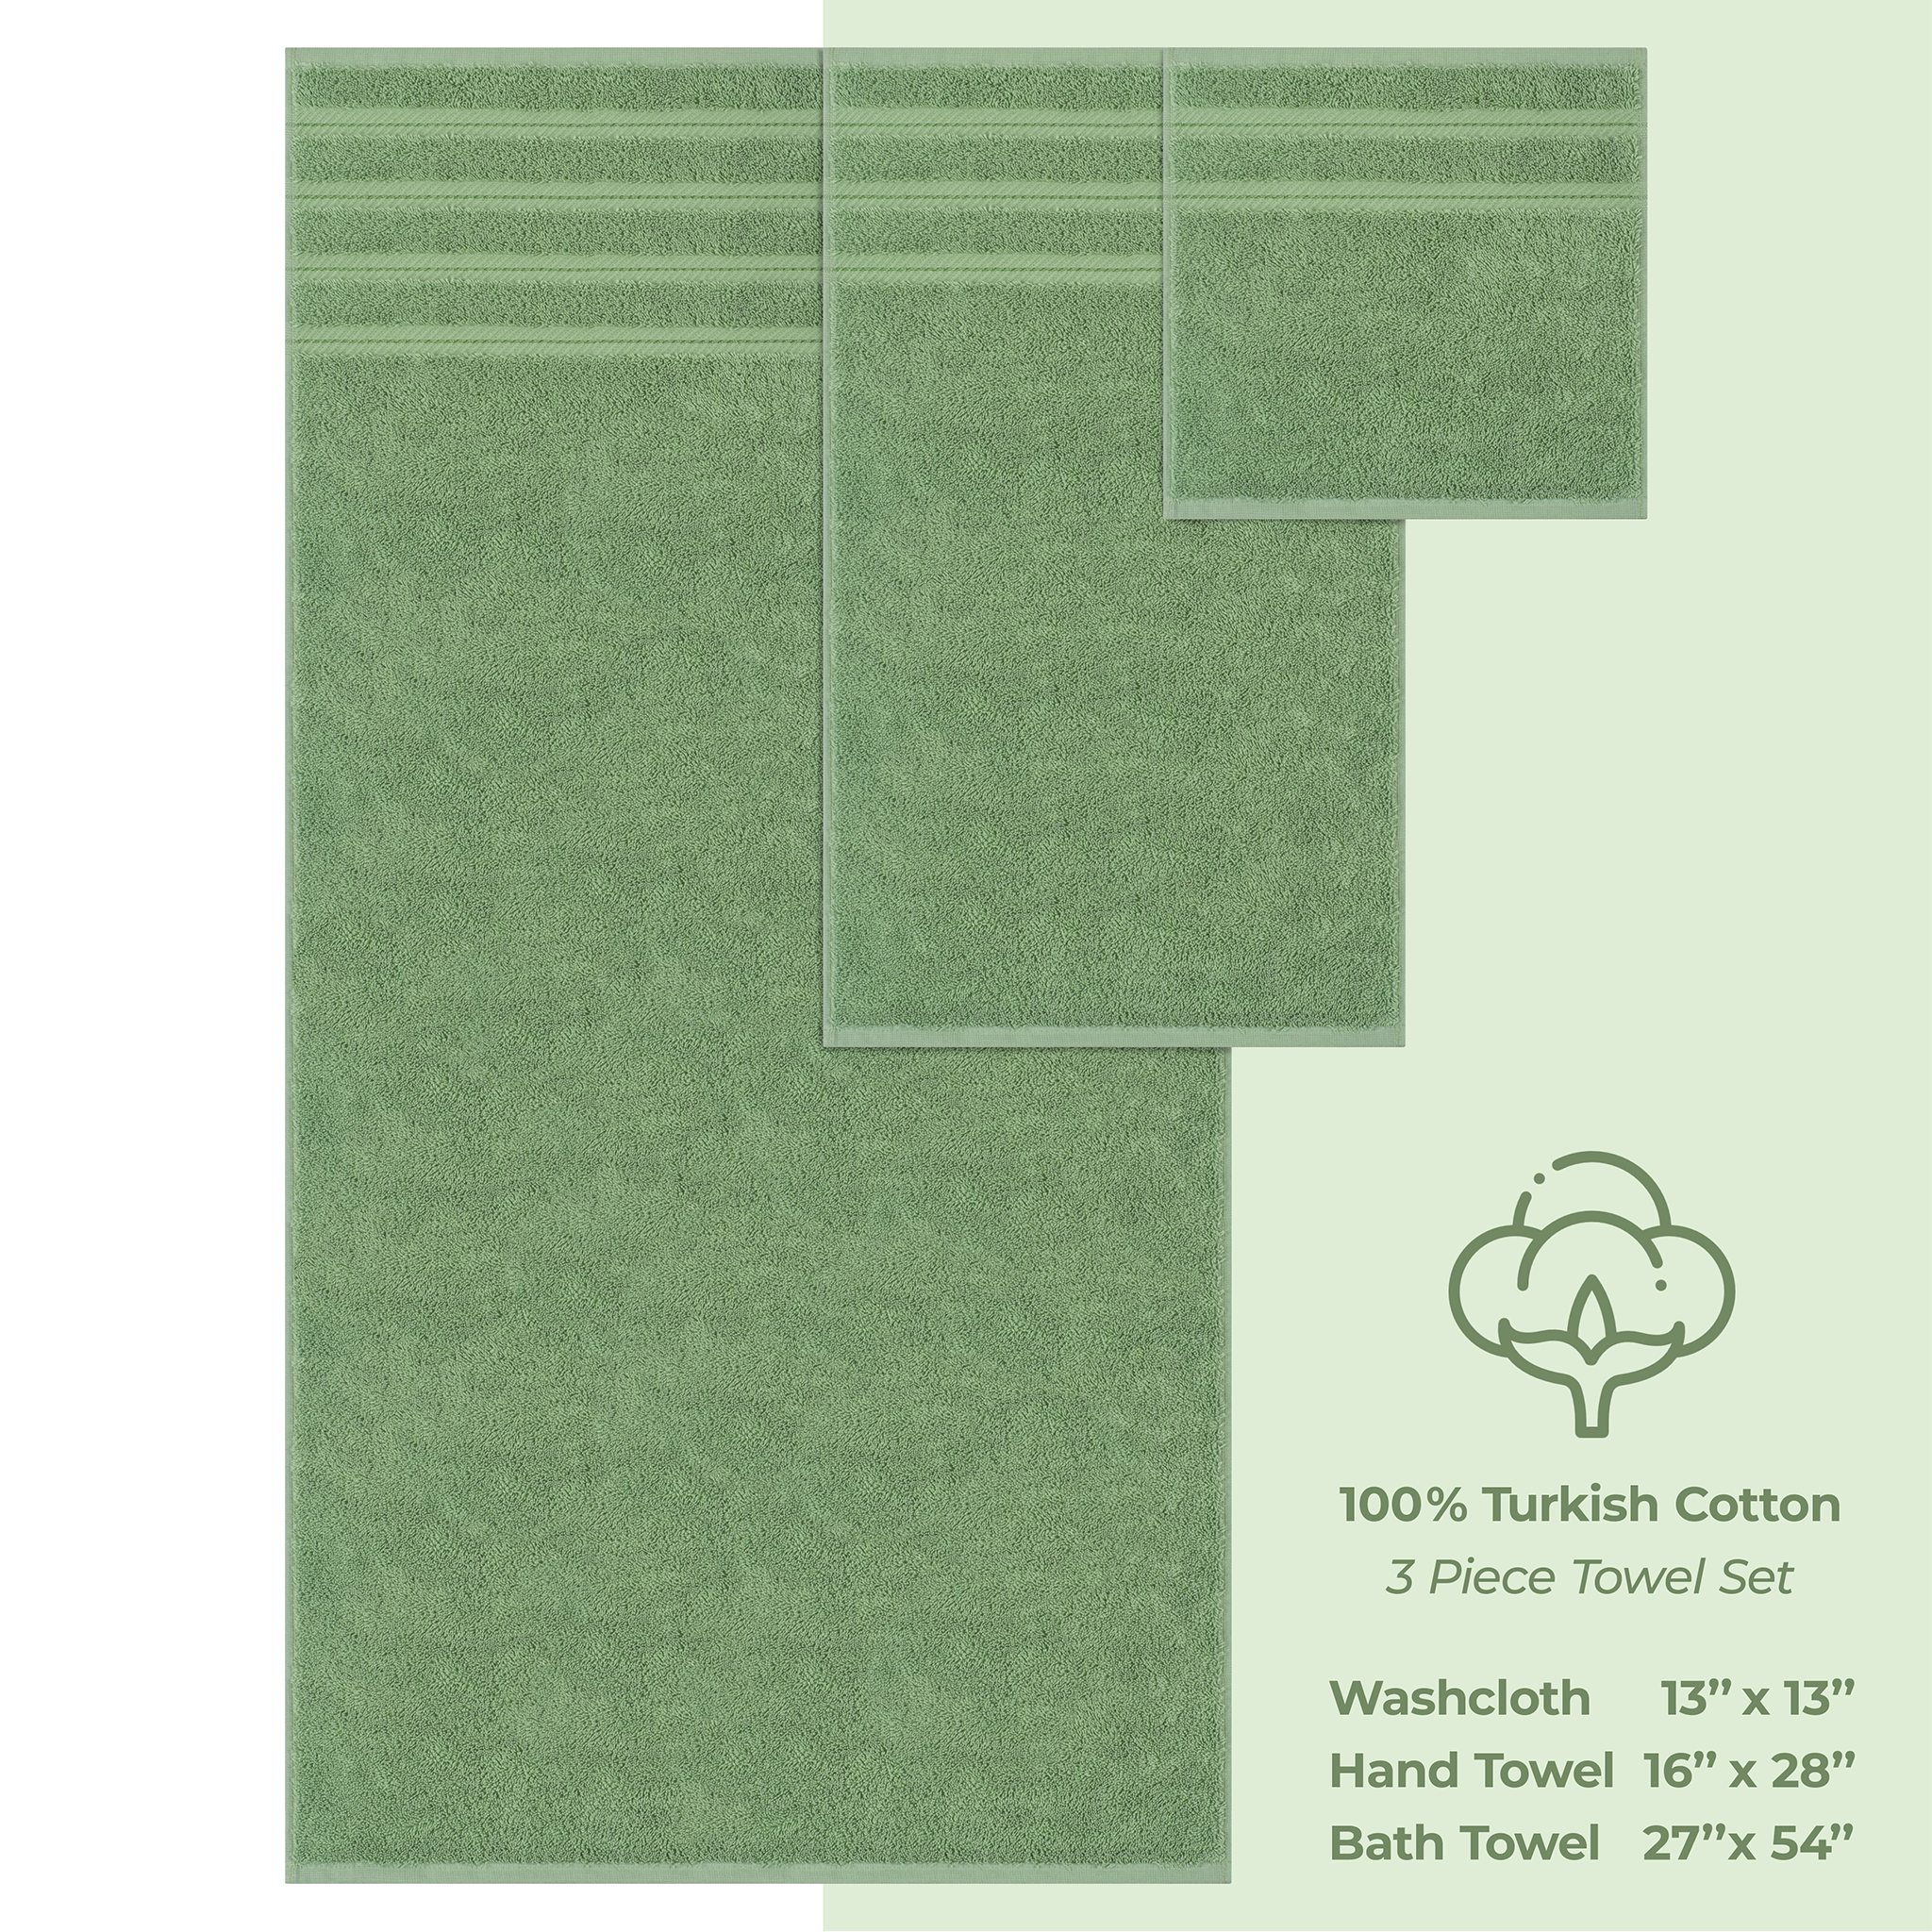 American Soft Linen - 3 Piece Turkish Cotton Towel Set - Sage-Green - 4